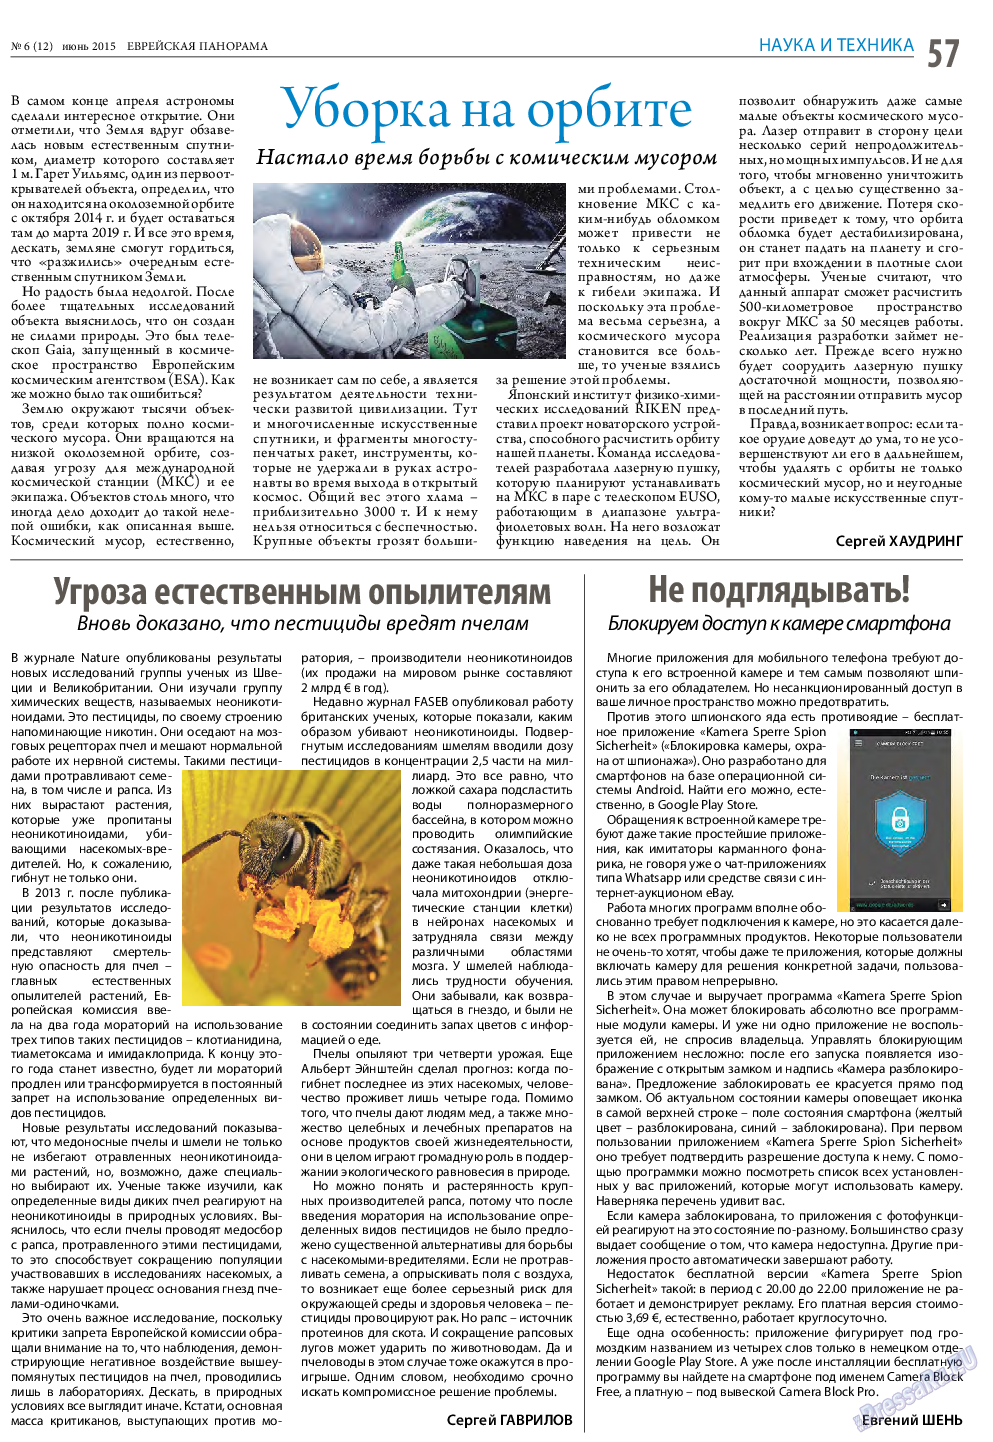 Еврейская панорама, газета. 2015 №6 стр.57